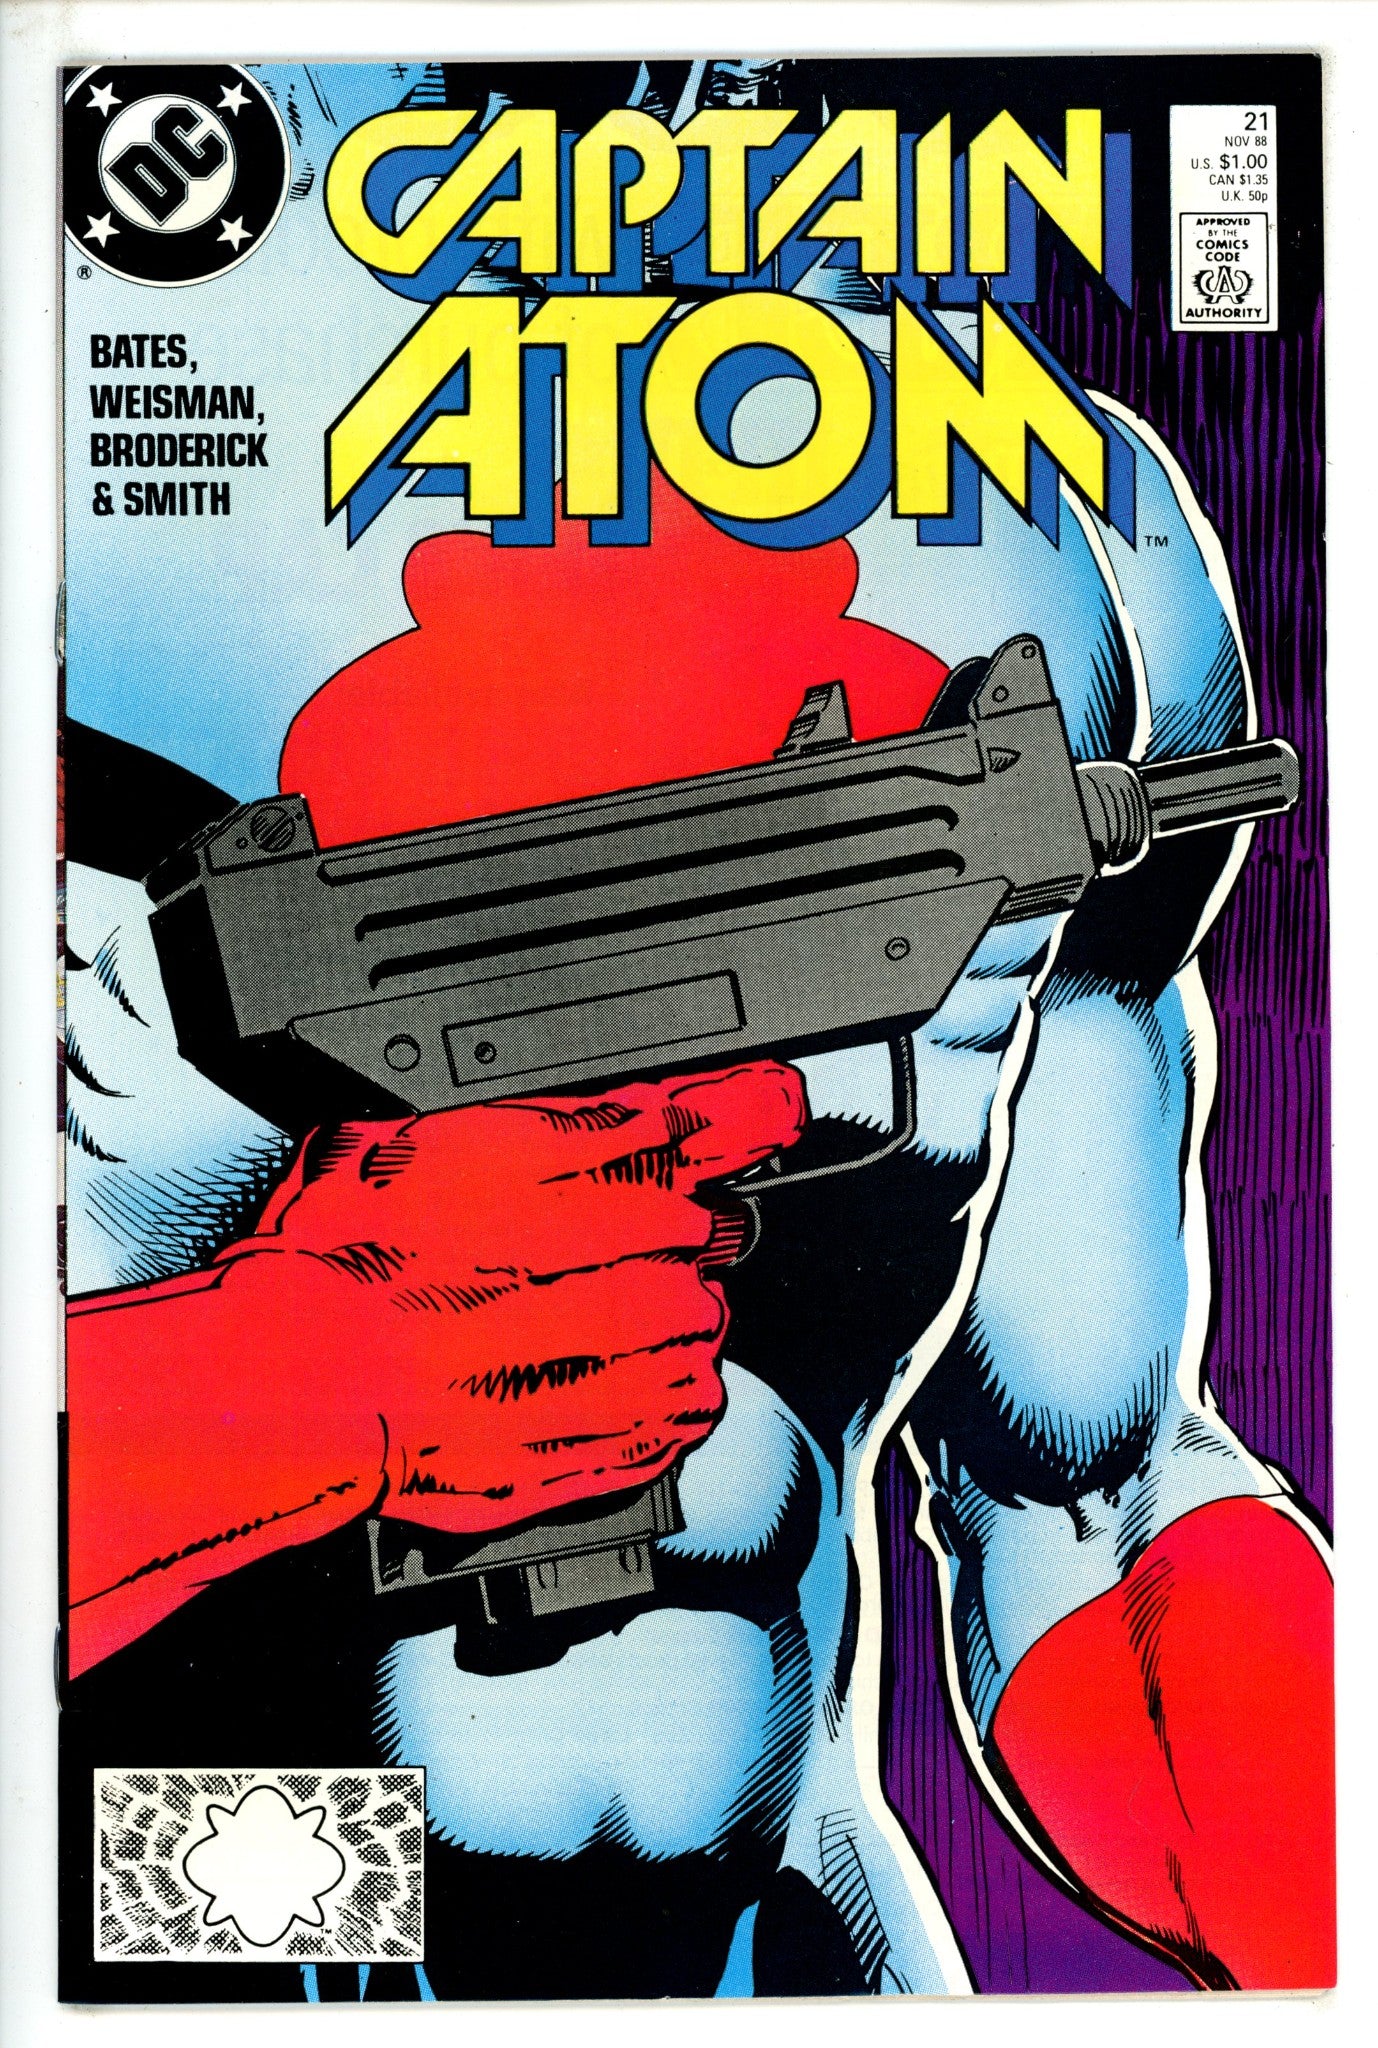 Captain Atom Vol 3 21 (1988)